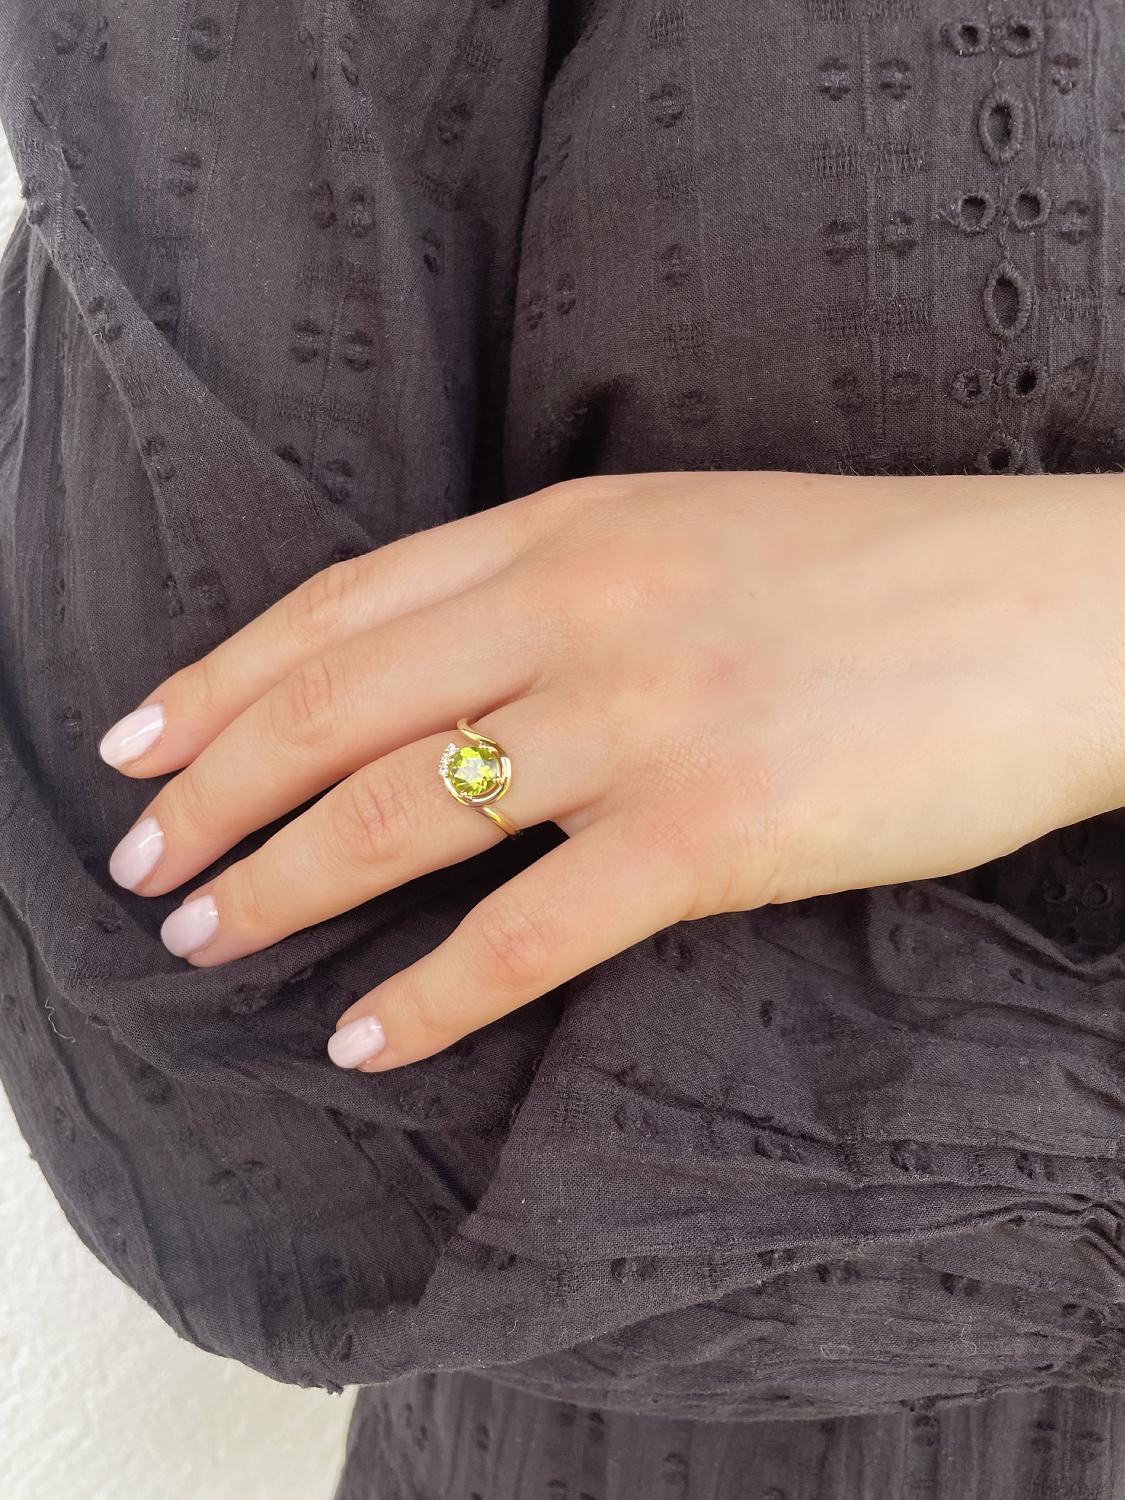 Damenring aus echtem Gelbgold mit weißen Zirkonia & Peridot Edelstein an Damenhand - Sala | Skintype